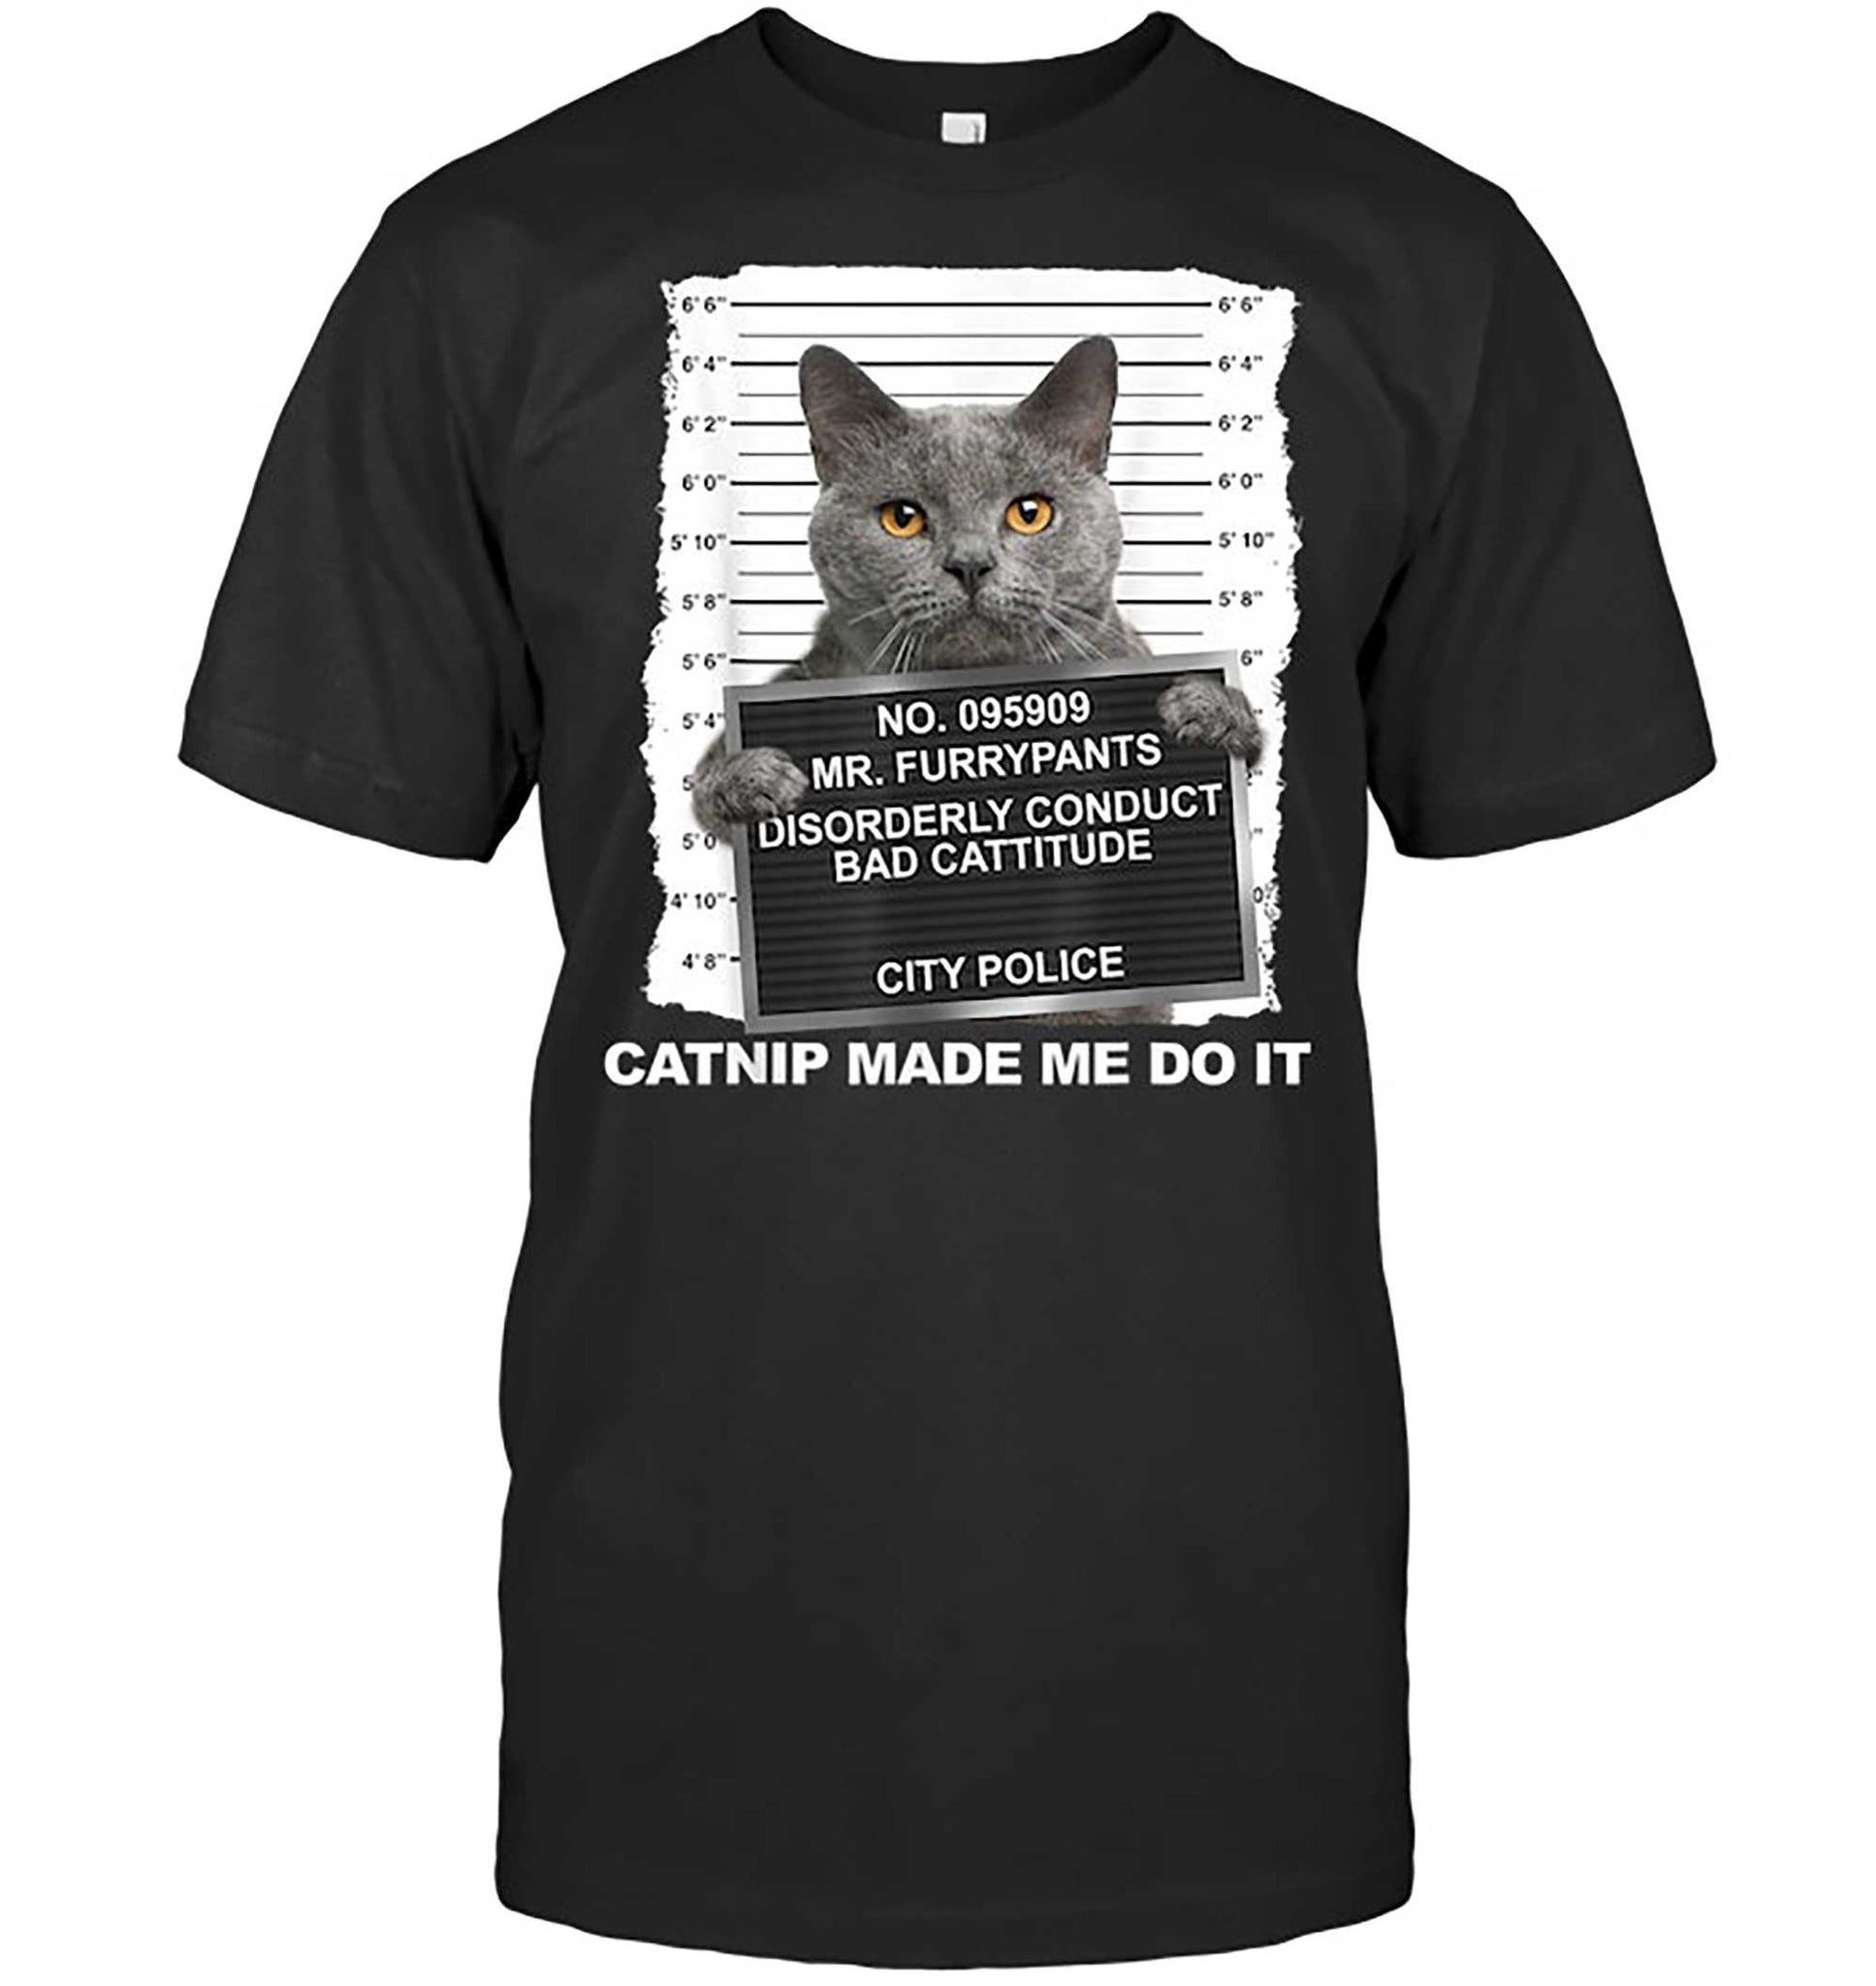 Skitongift-Catnip-Made-Me-Do-It-Funny-Cat-Tee-T-Shirt-Funny-Shirts-Hoodie-Sweater-Short-Sleeve-Casual-Shirt